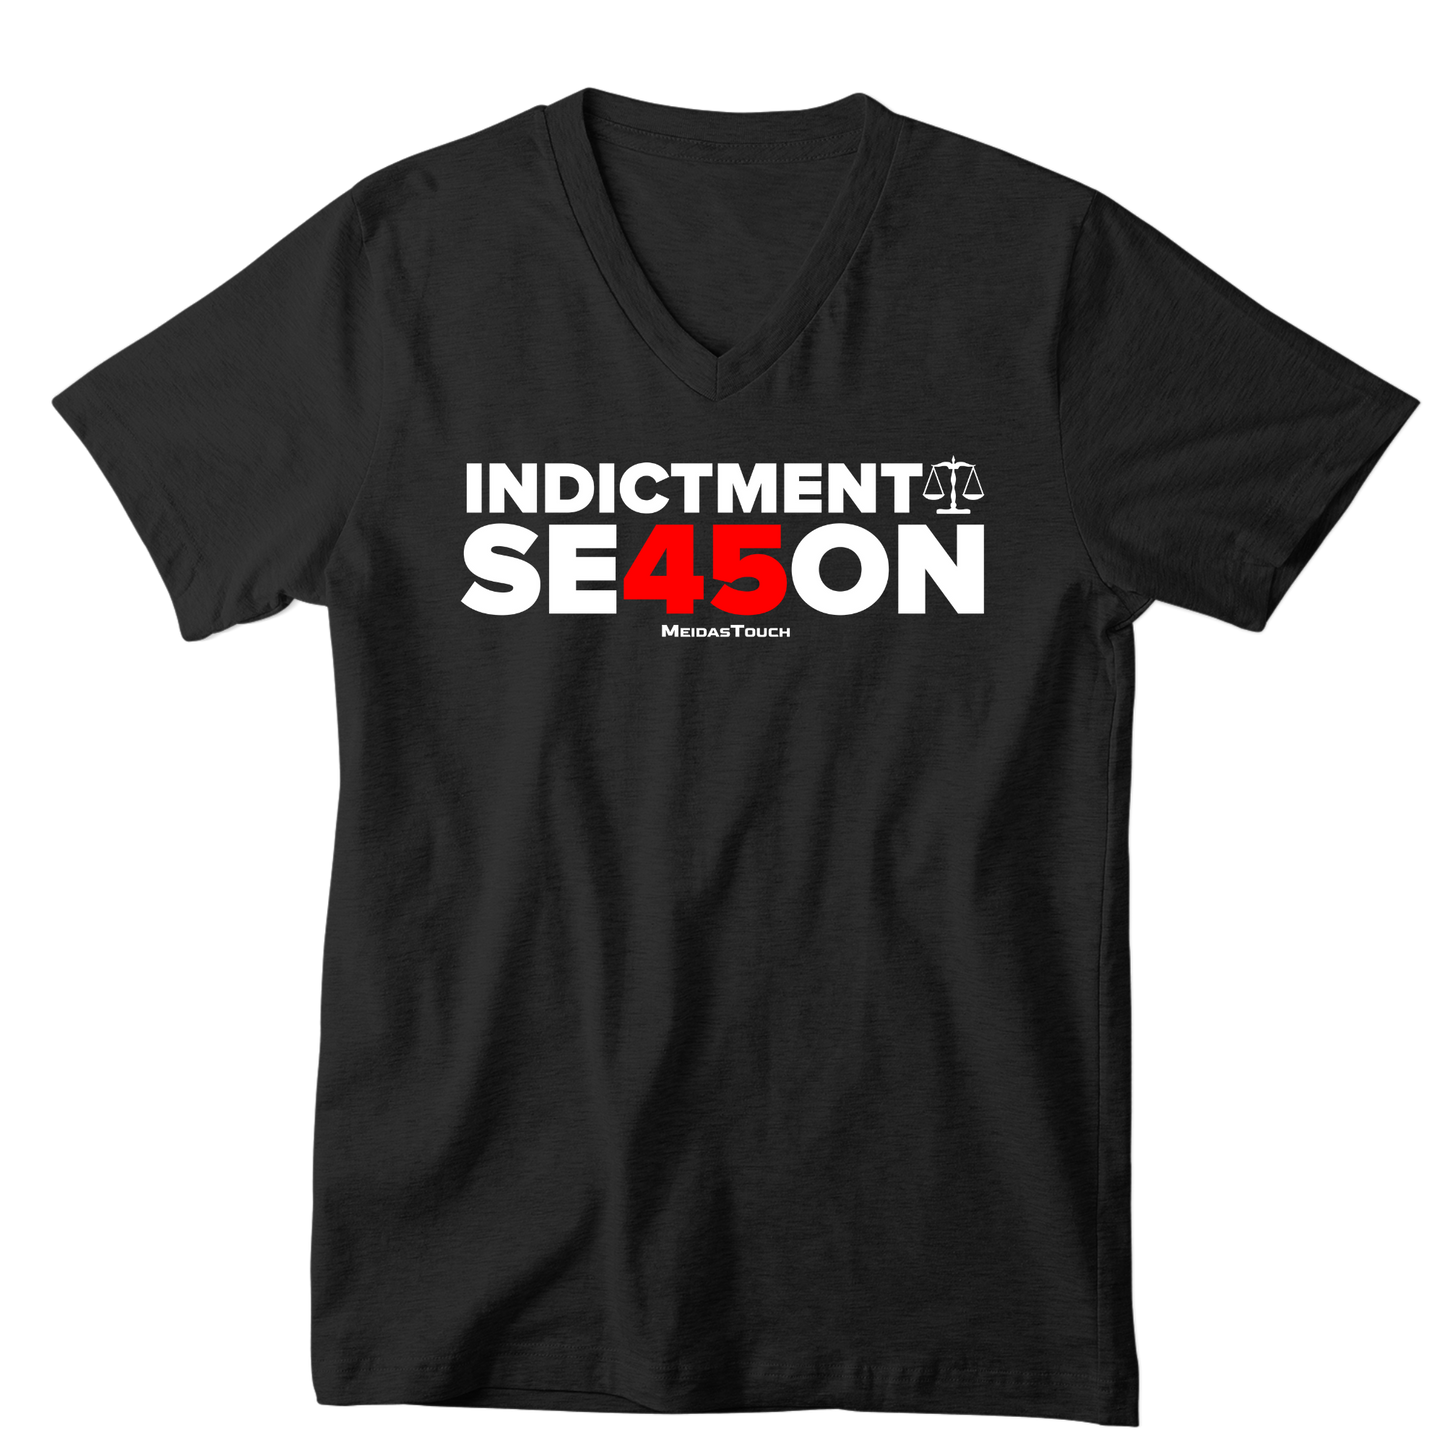 Indictment Season Tee